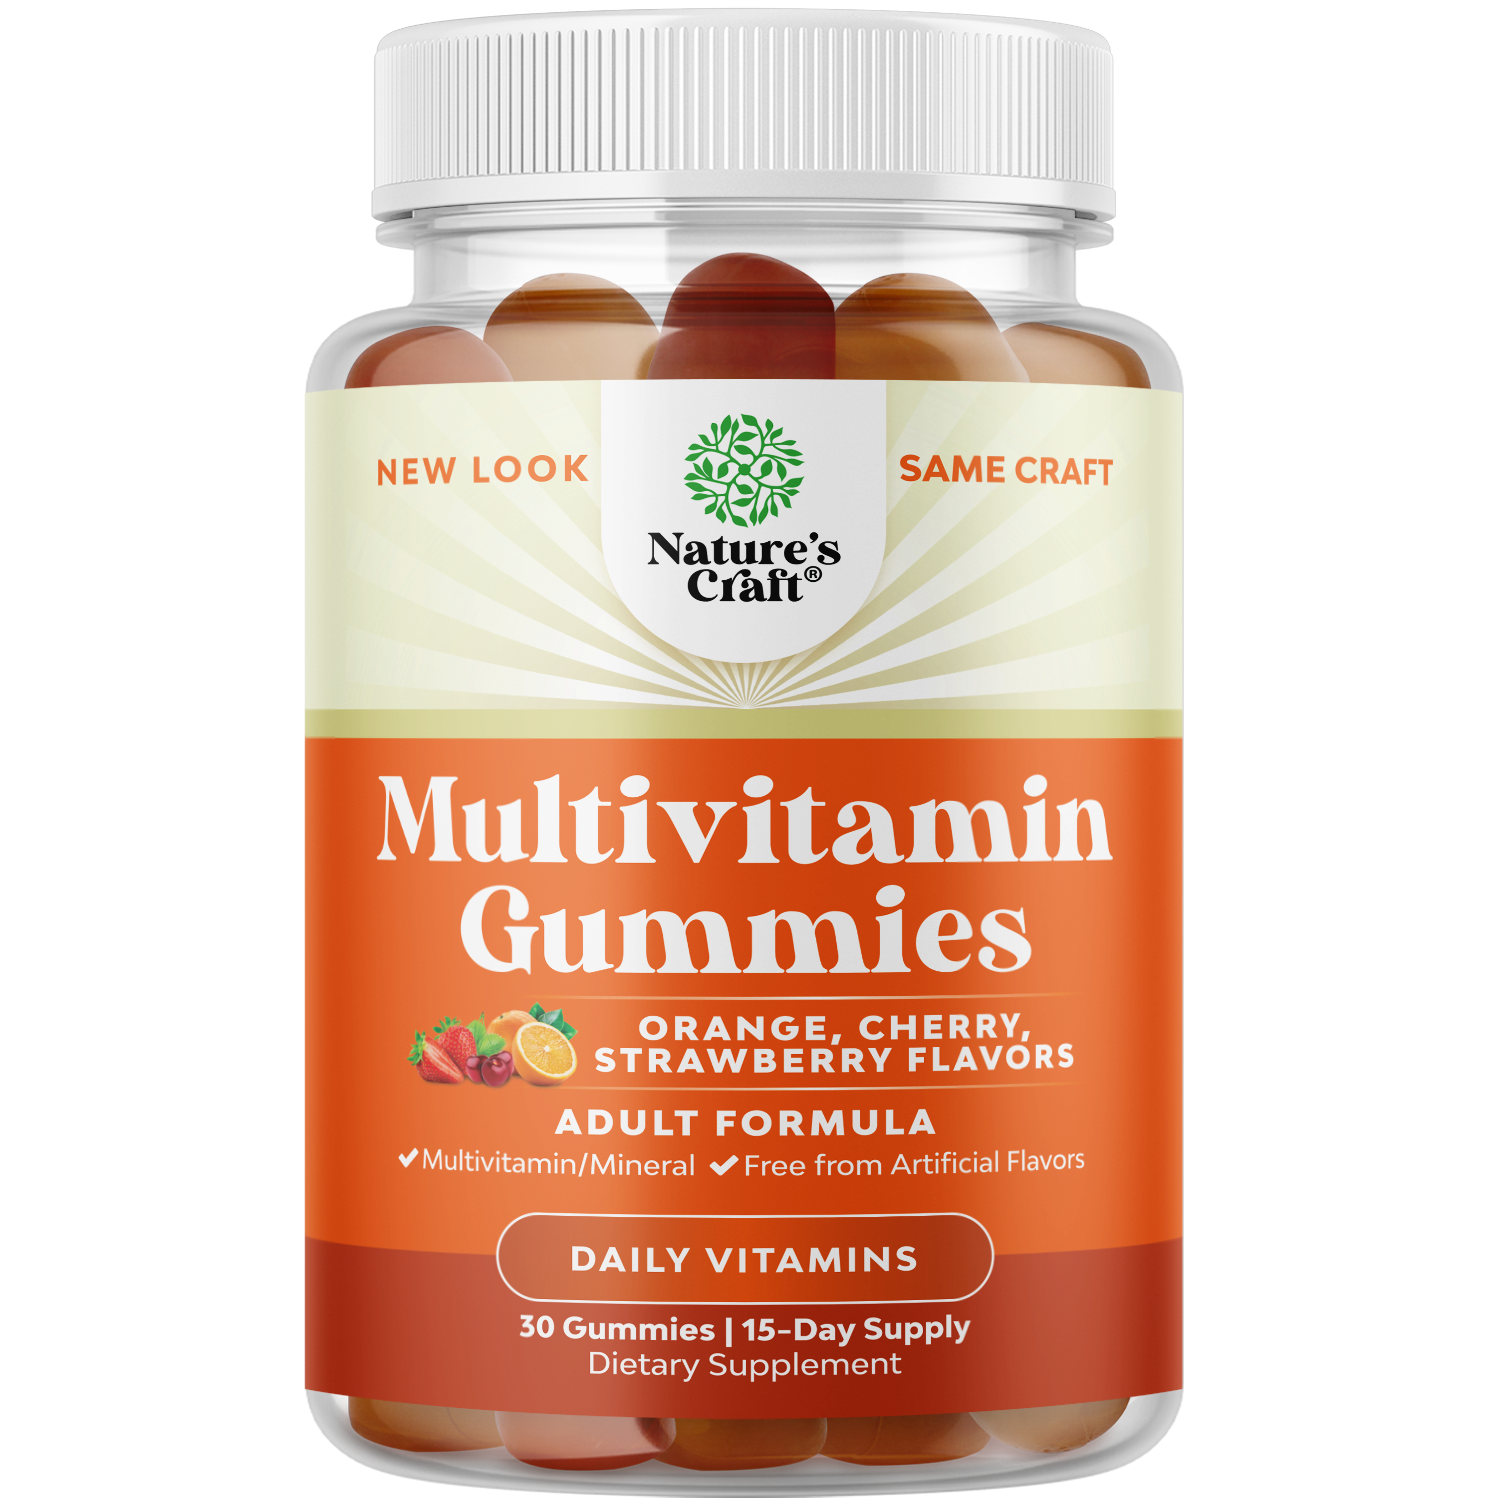 Multivitamin Gummies - 30 Gummies